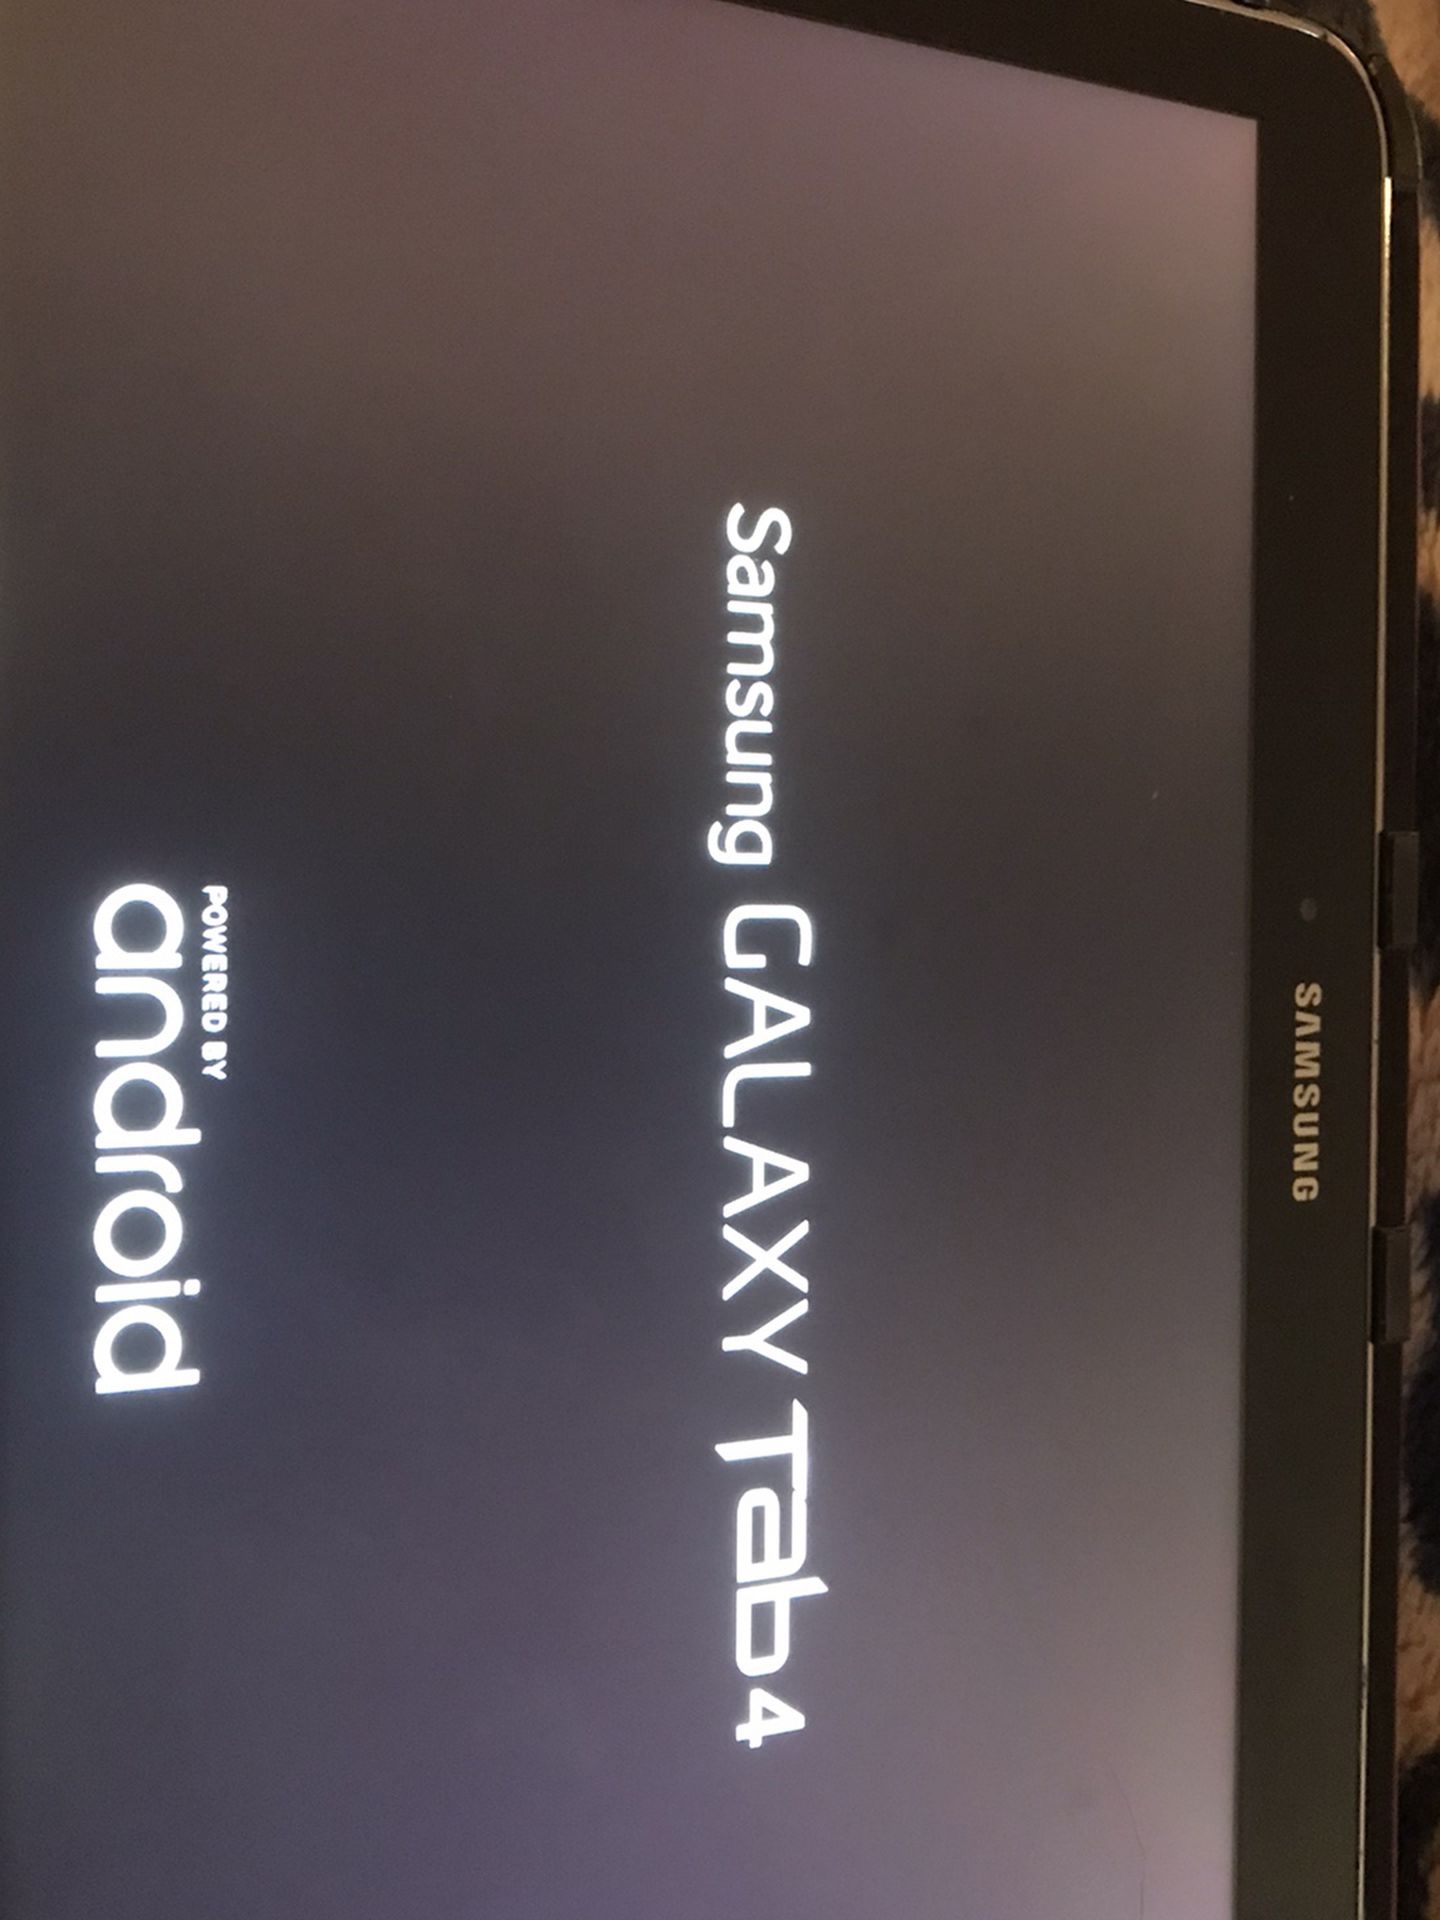 Samsung Galaxy Tab 4 SM-T537V (WiFi + Verizon 4G LTE) 10.1"